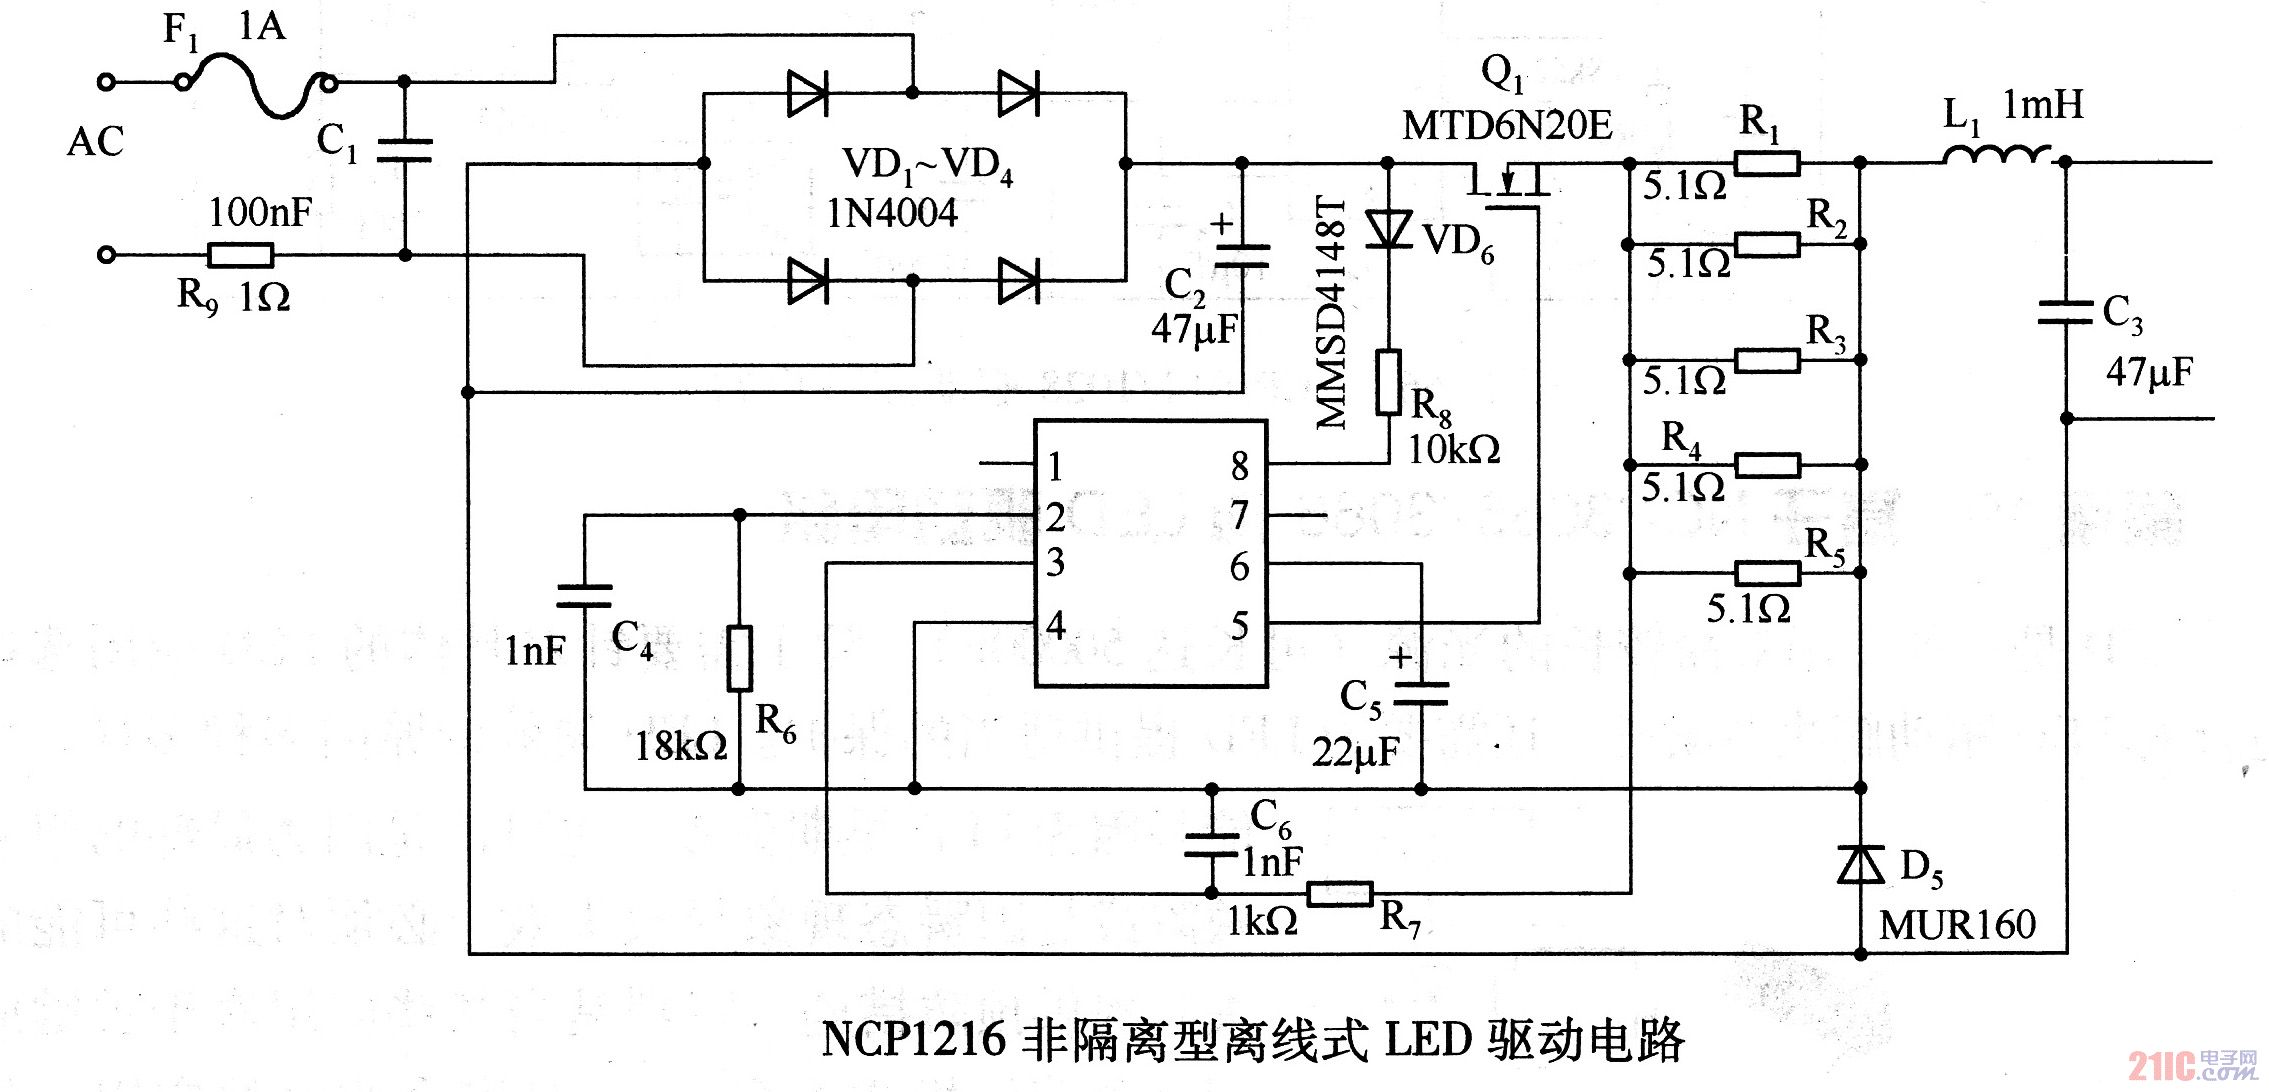 NCP1216非隔离型离线式LED驱动电路<br />
.jpg